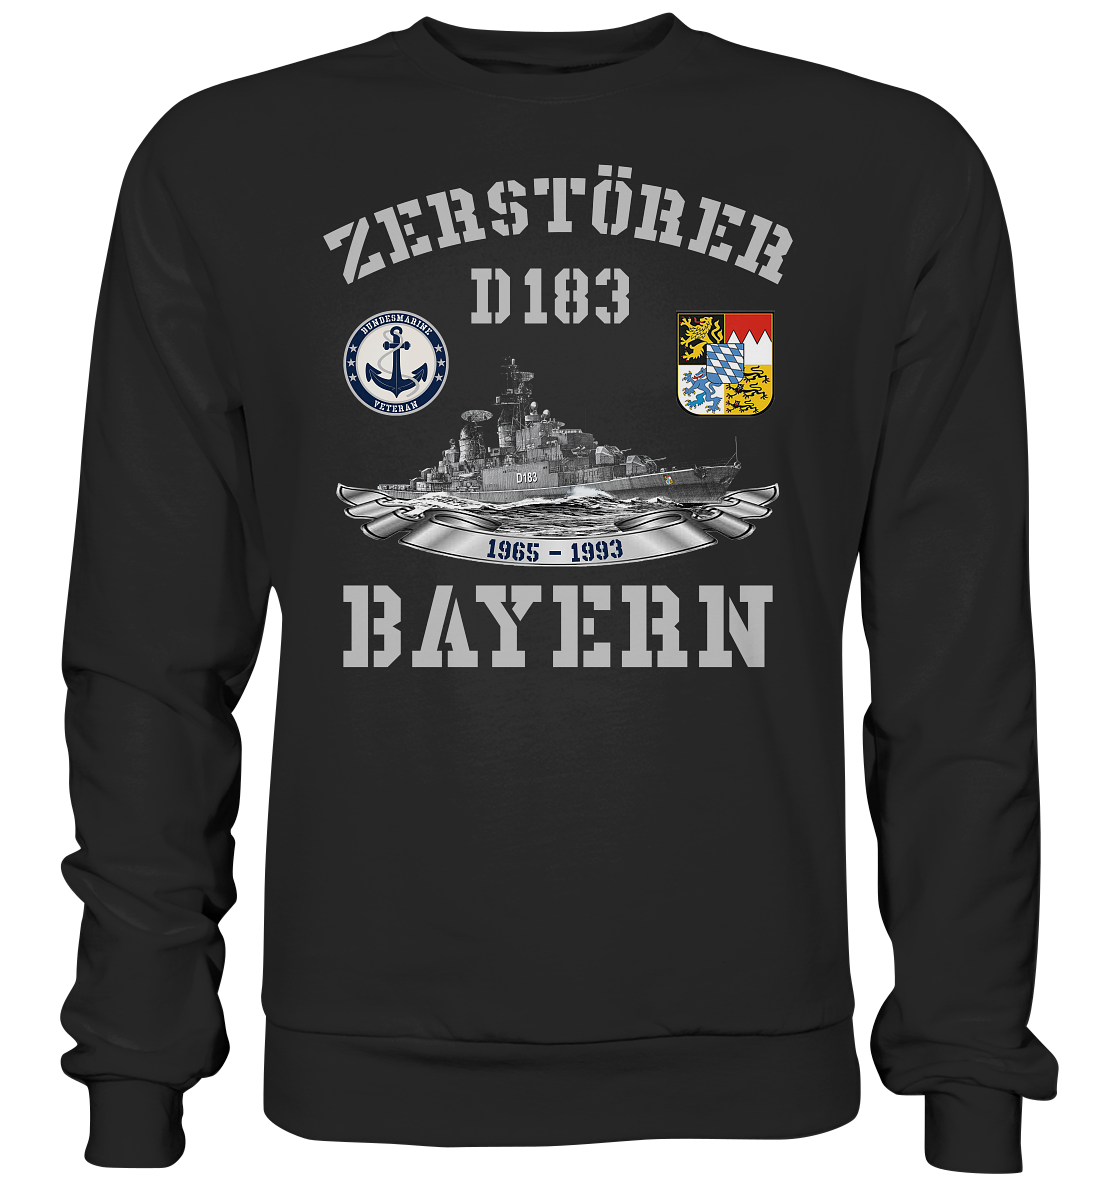 Zerstörer D183 BAYERN Bundesmarine Veteran - Premium Sweatshirt